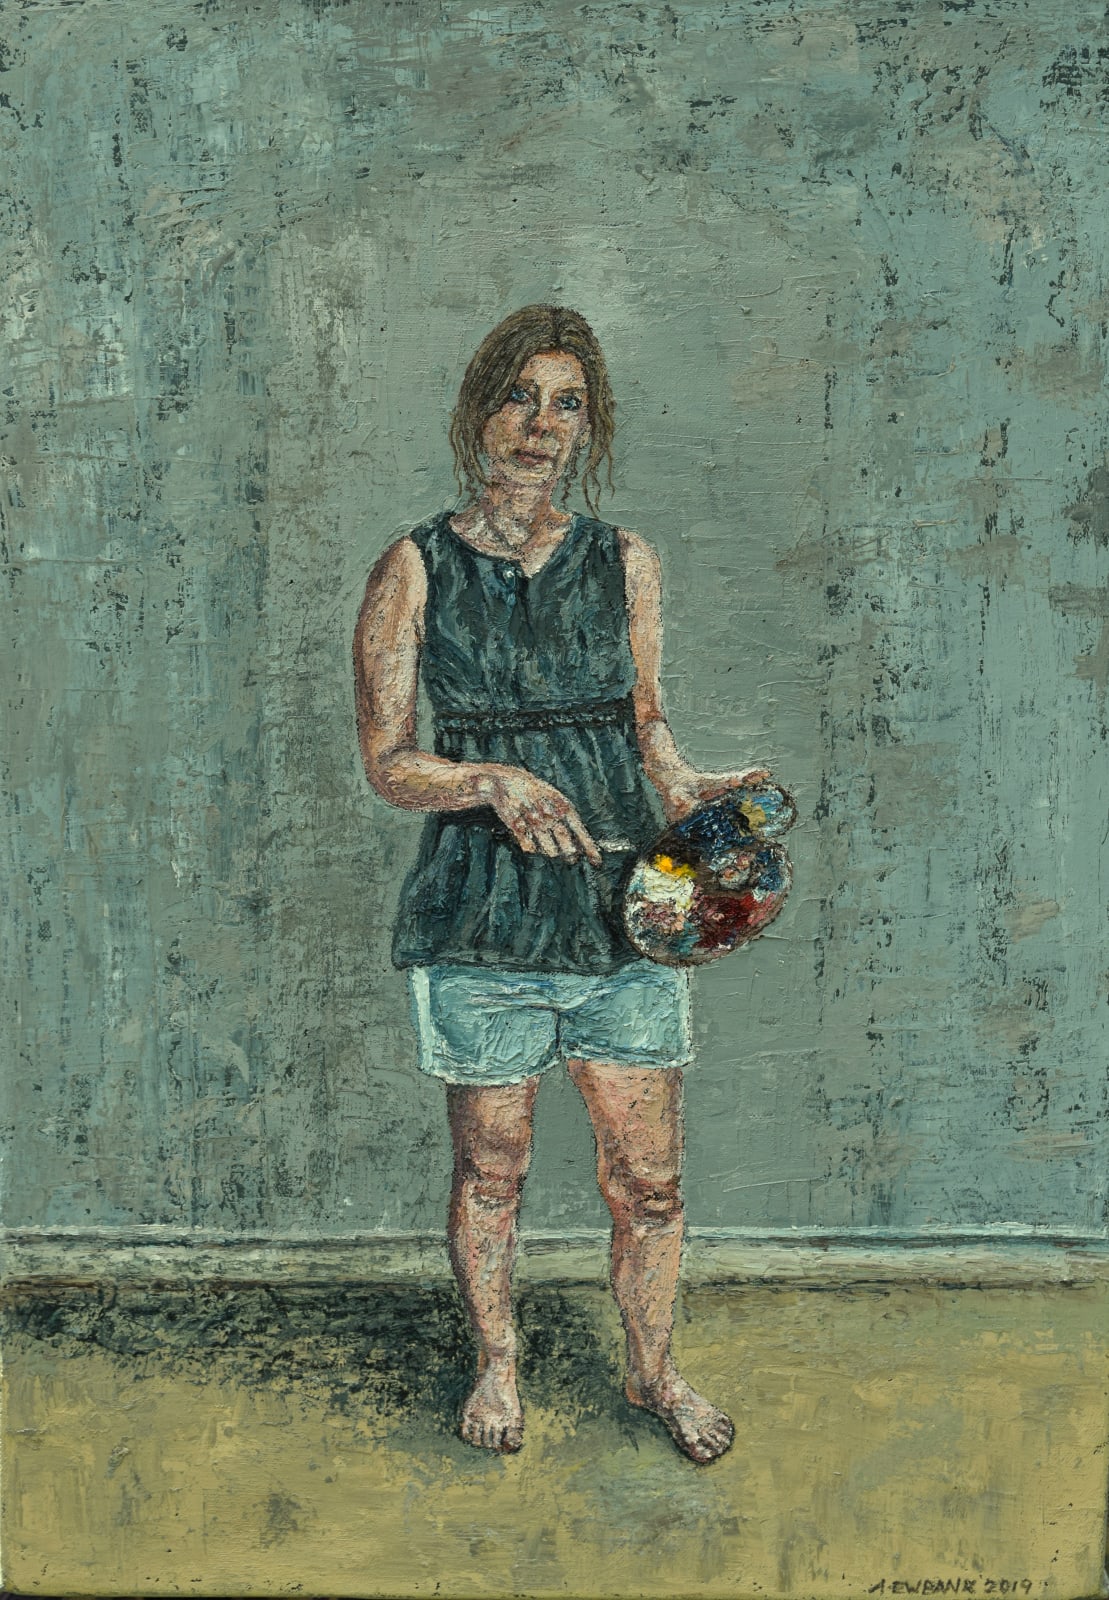 Amanda Ewbank, Self-Portrait with Palette